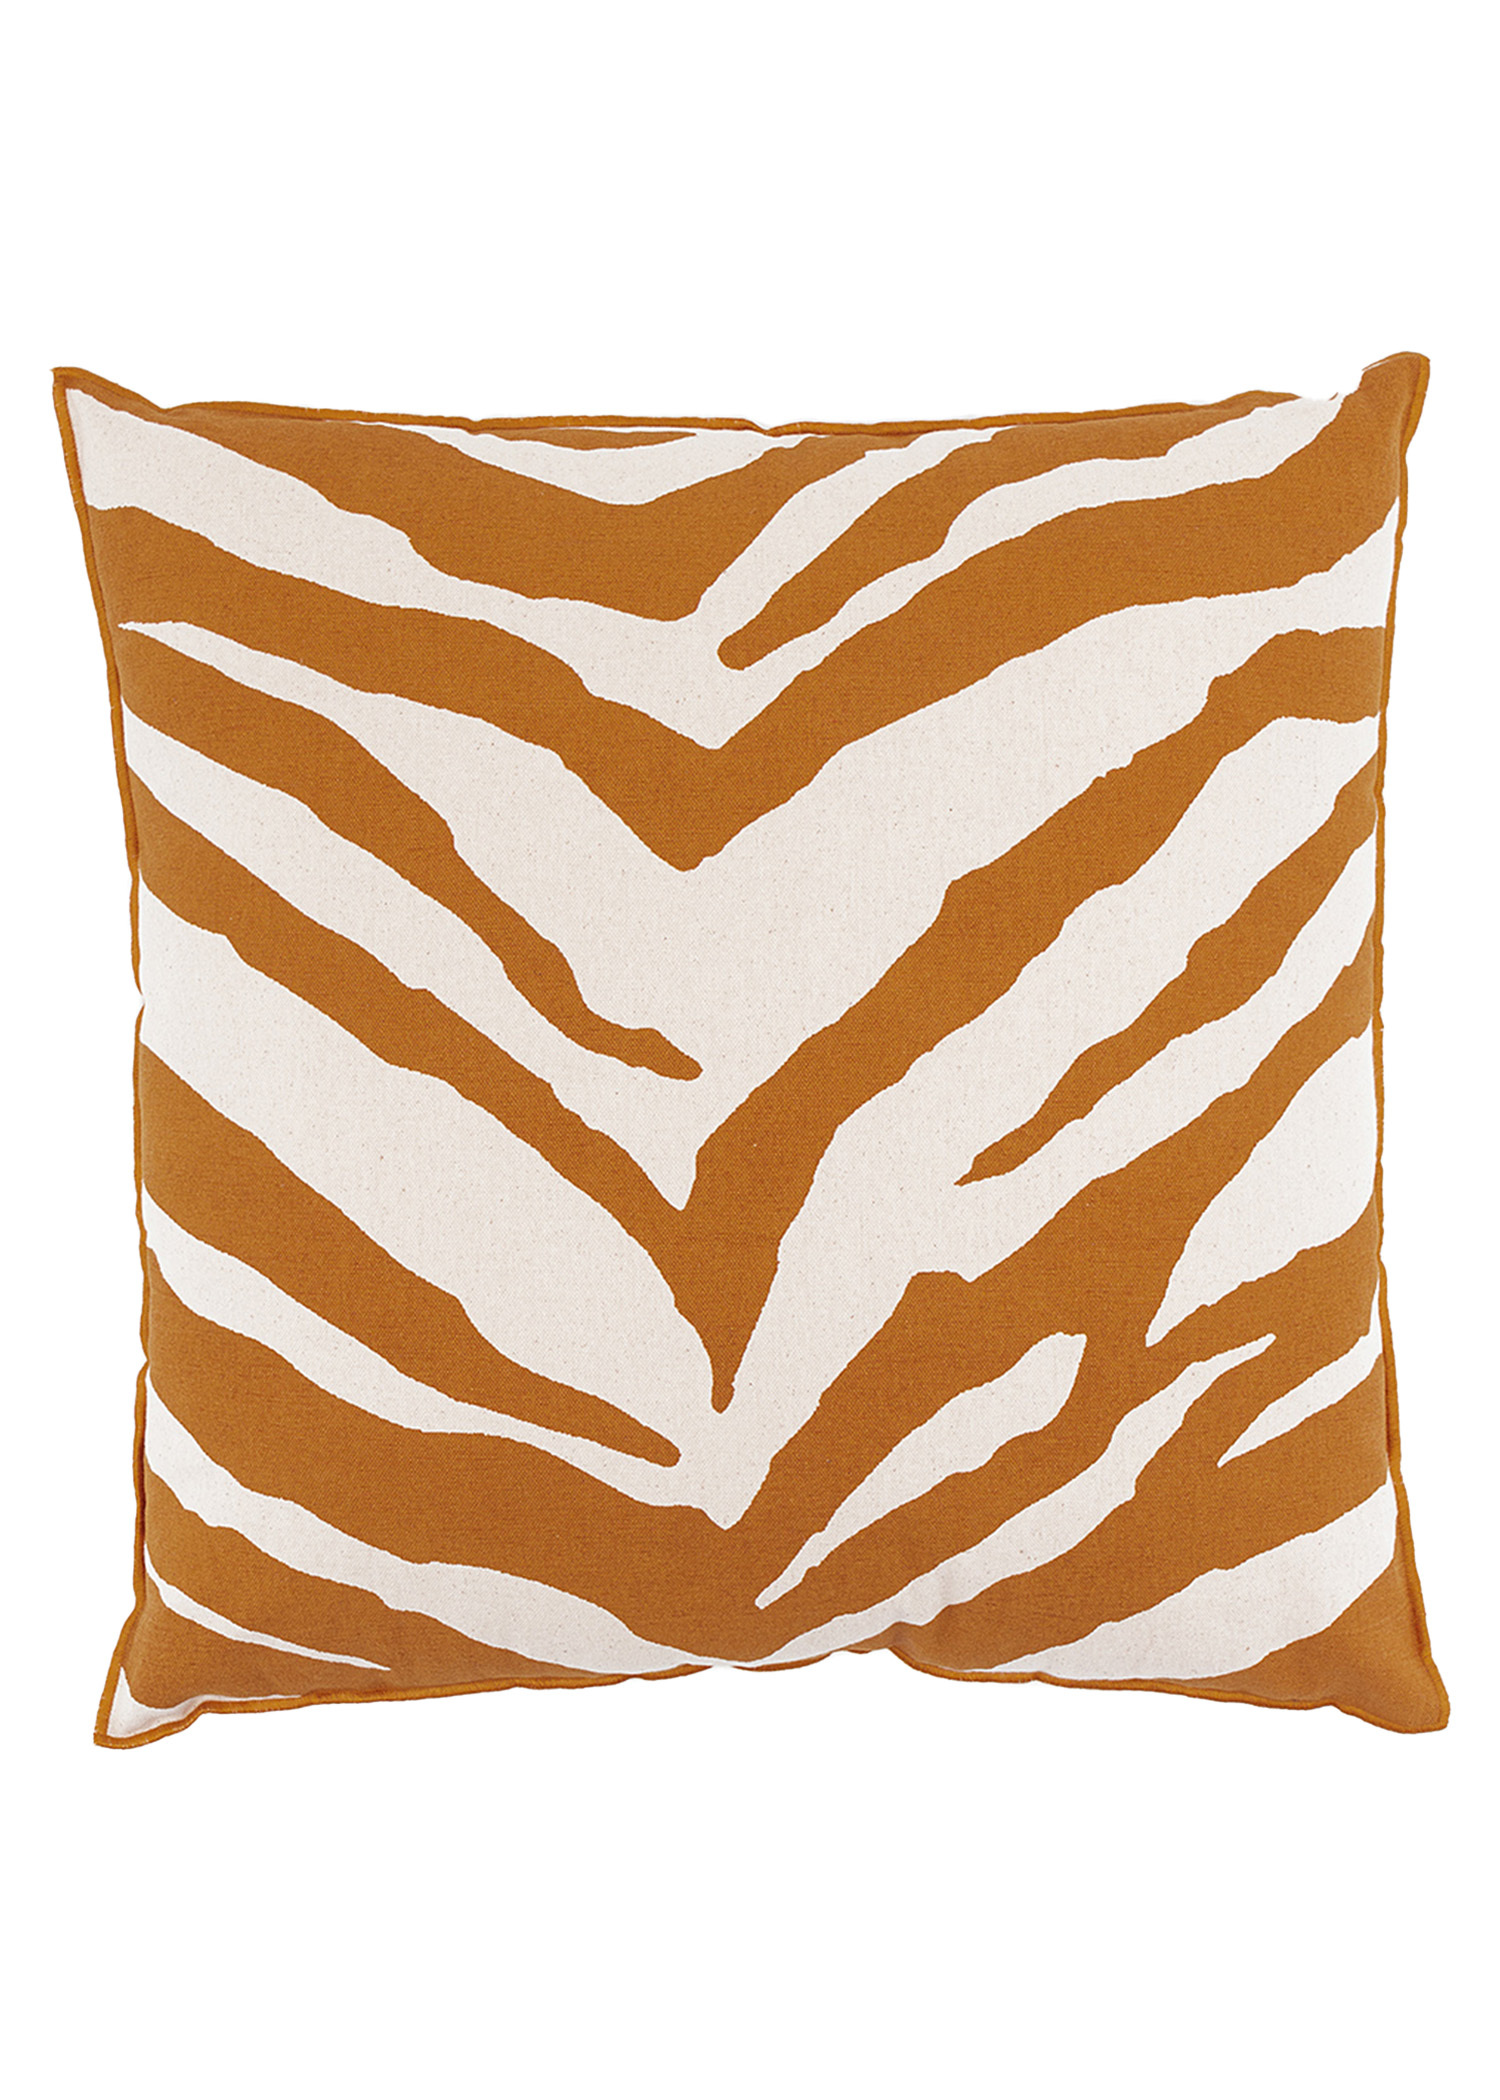 Zebra patterned cushion thumbnail 0